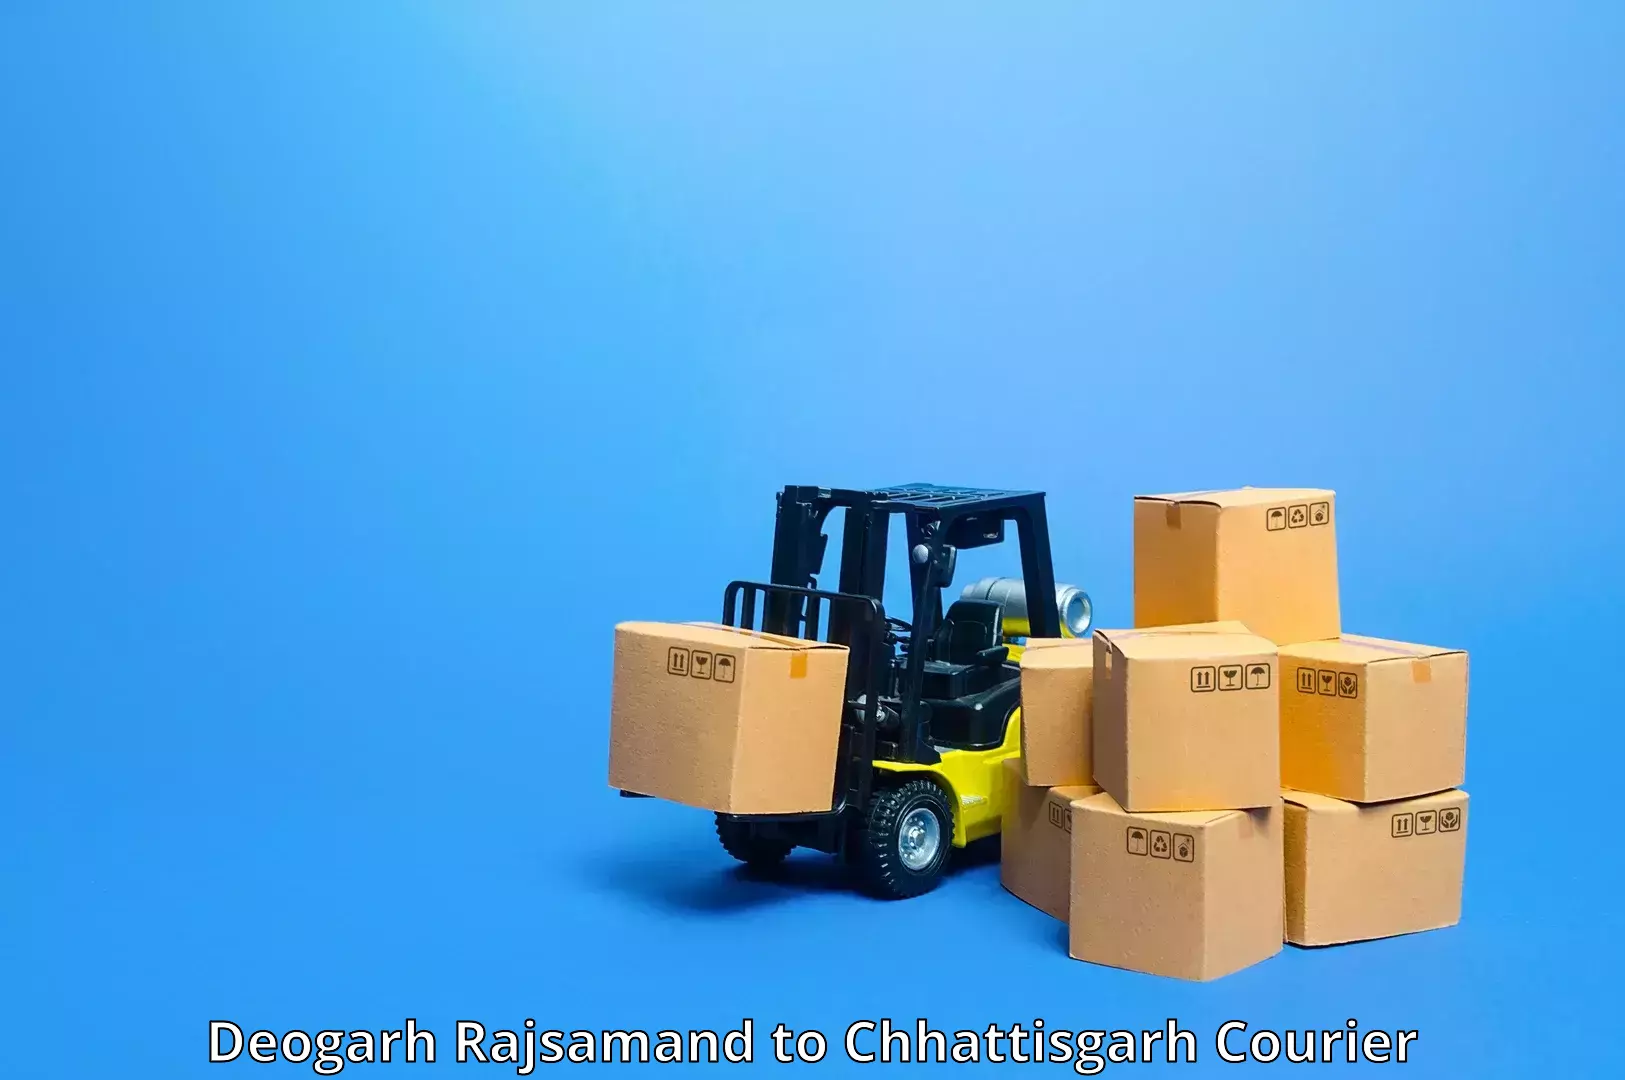 International courier networks Deogarh Rajsamand to Chhattisgarh